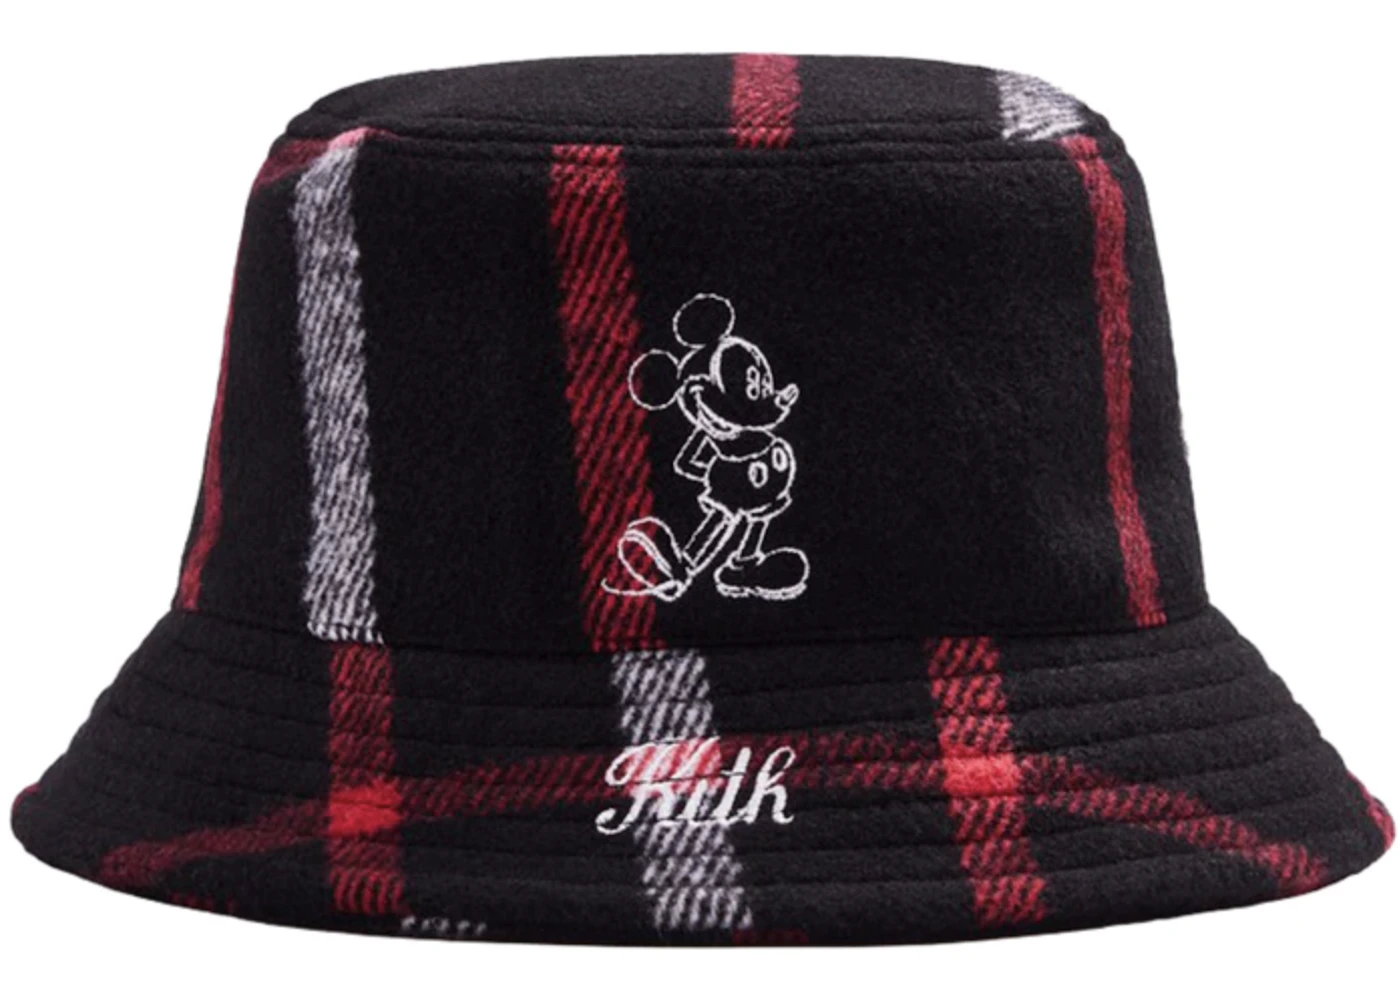 Kith x Disney Wool Bucket Hat Plaid/Black - FW19 - US